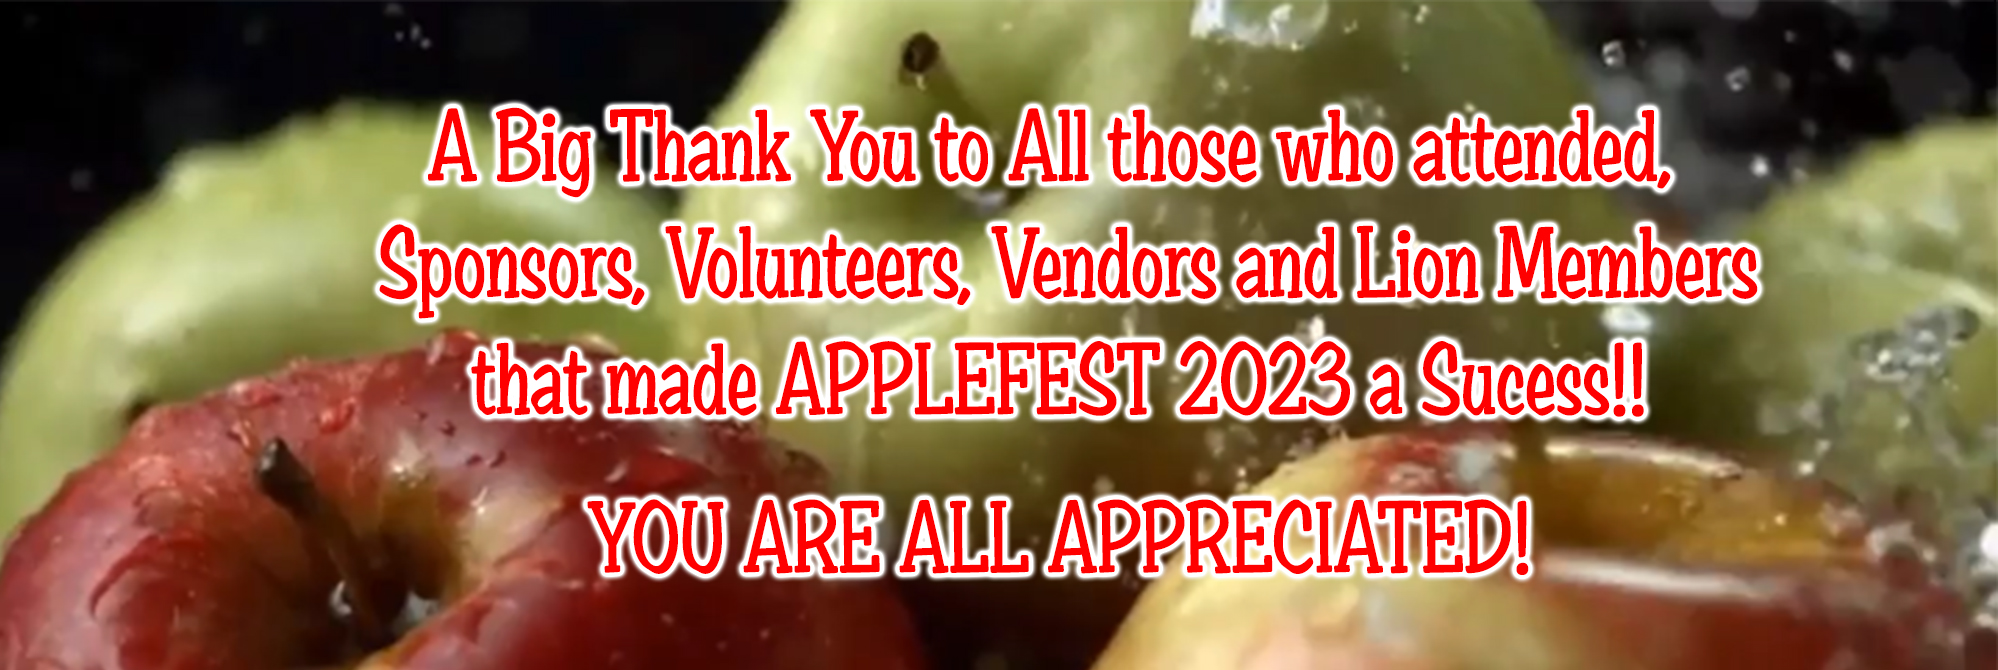 Applefest 2023 Thank You